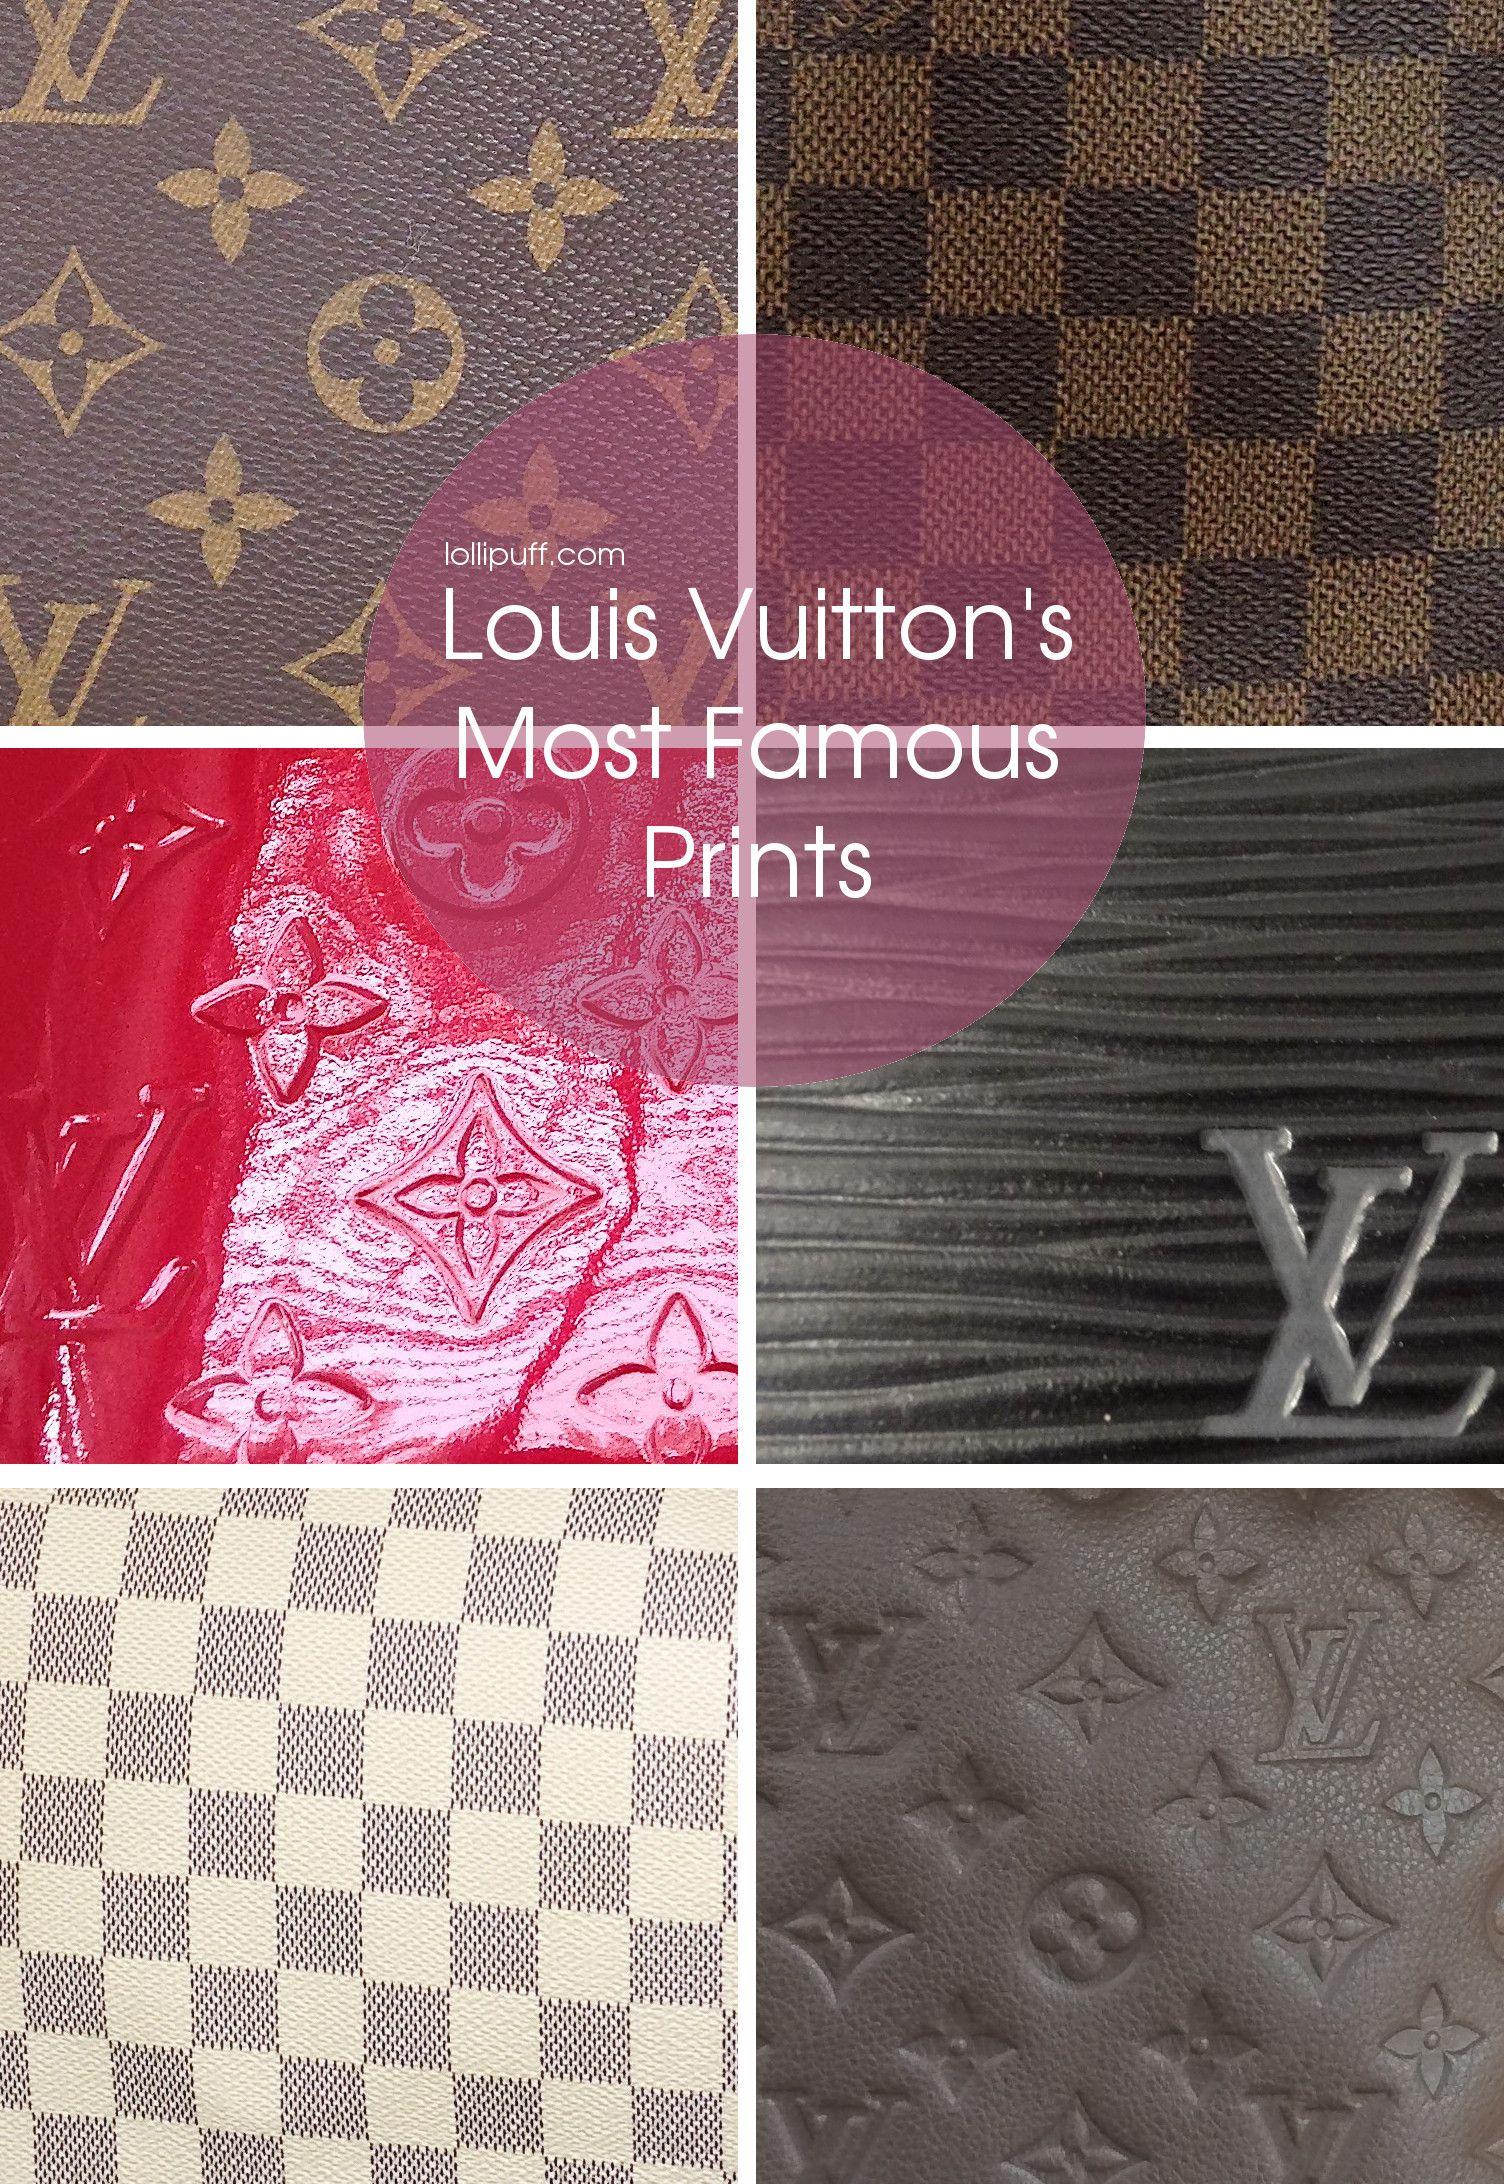 Louis Vuitton Leather Logo - Different Louis Vuitton Prints and Patterns | Lollipuff